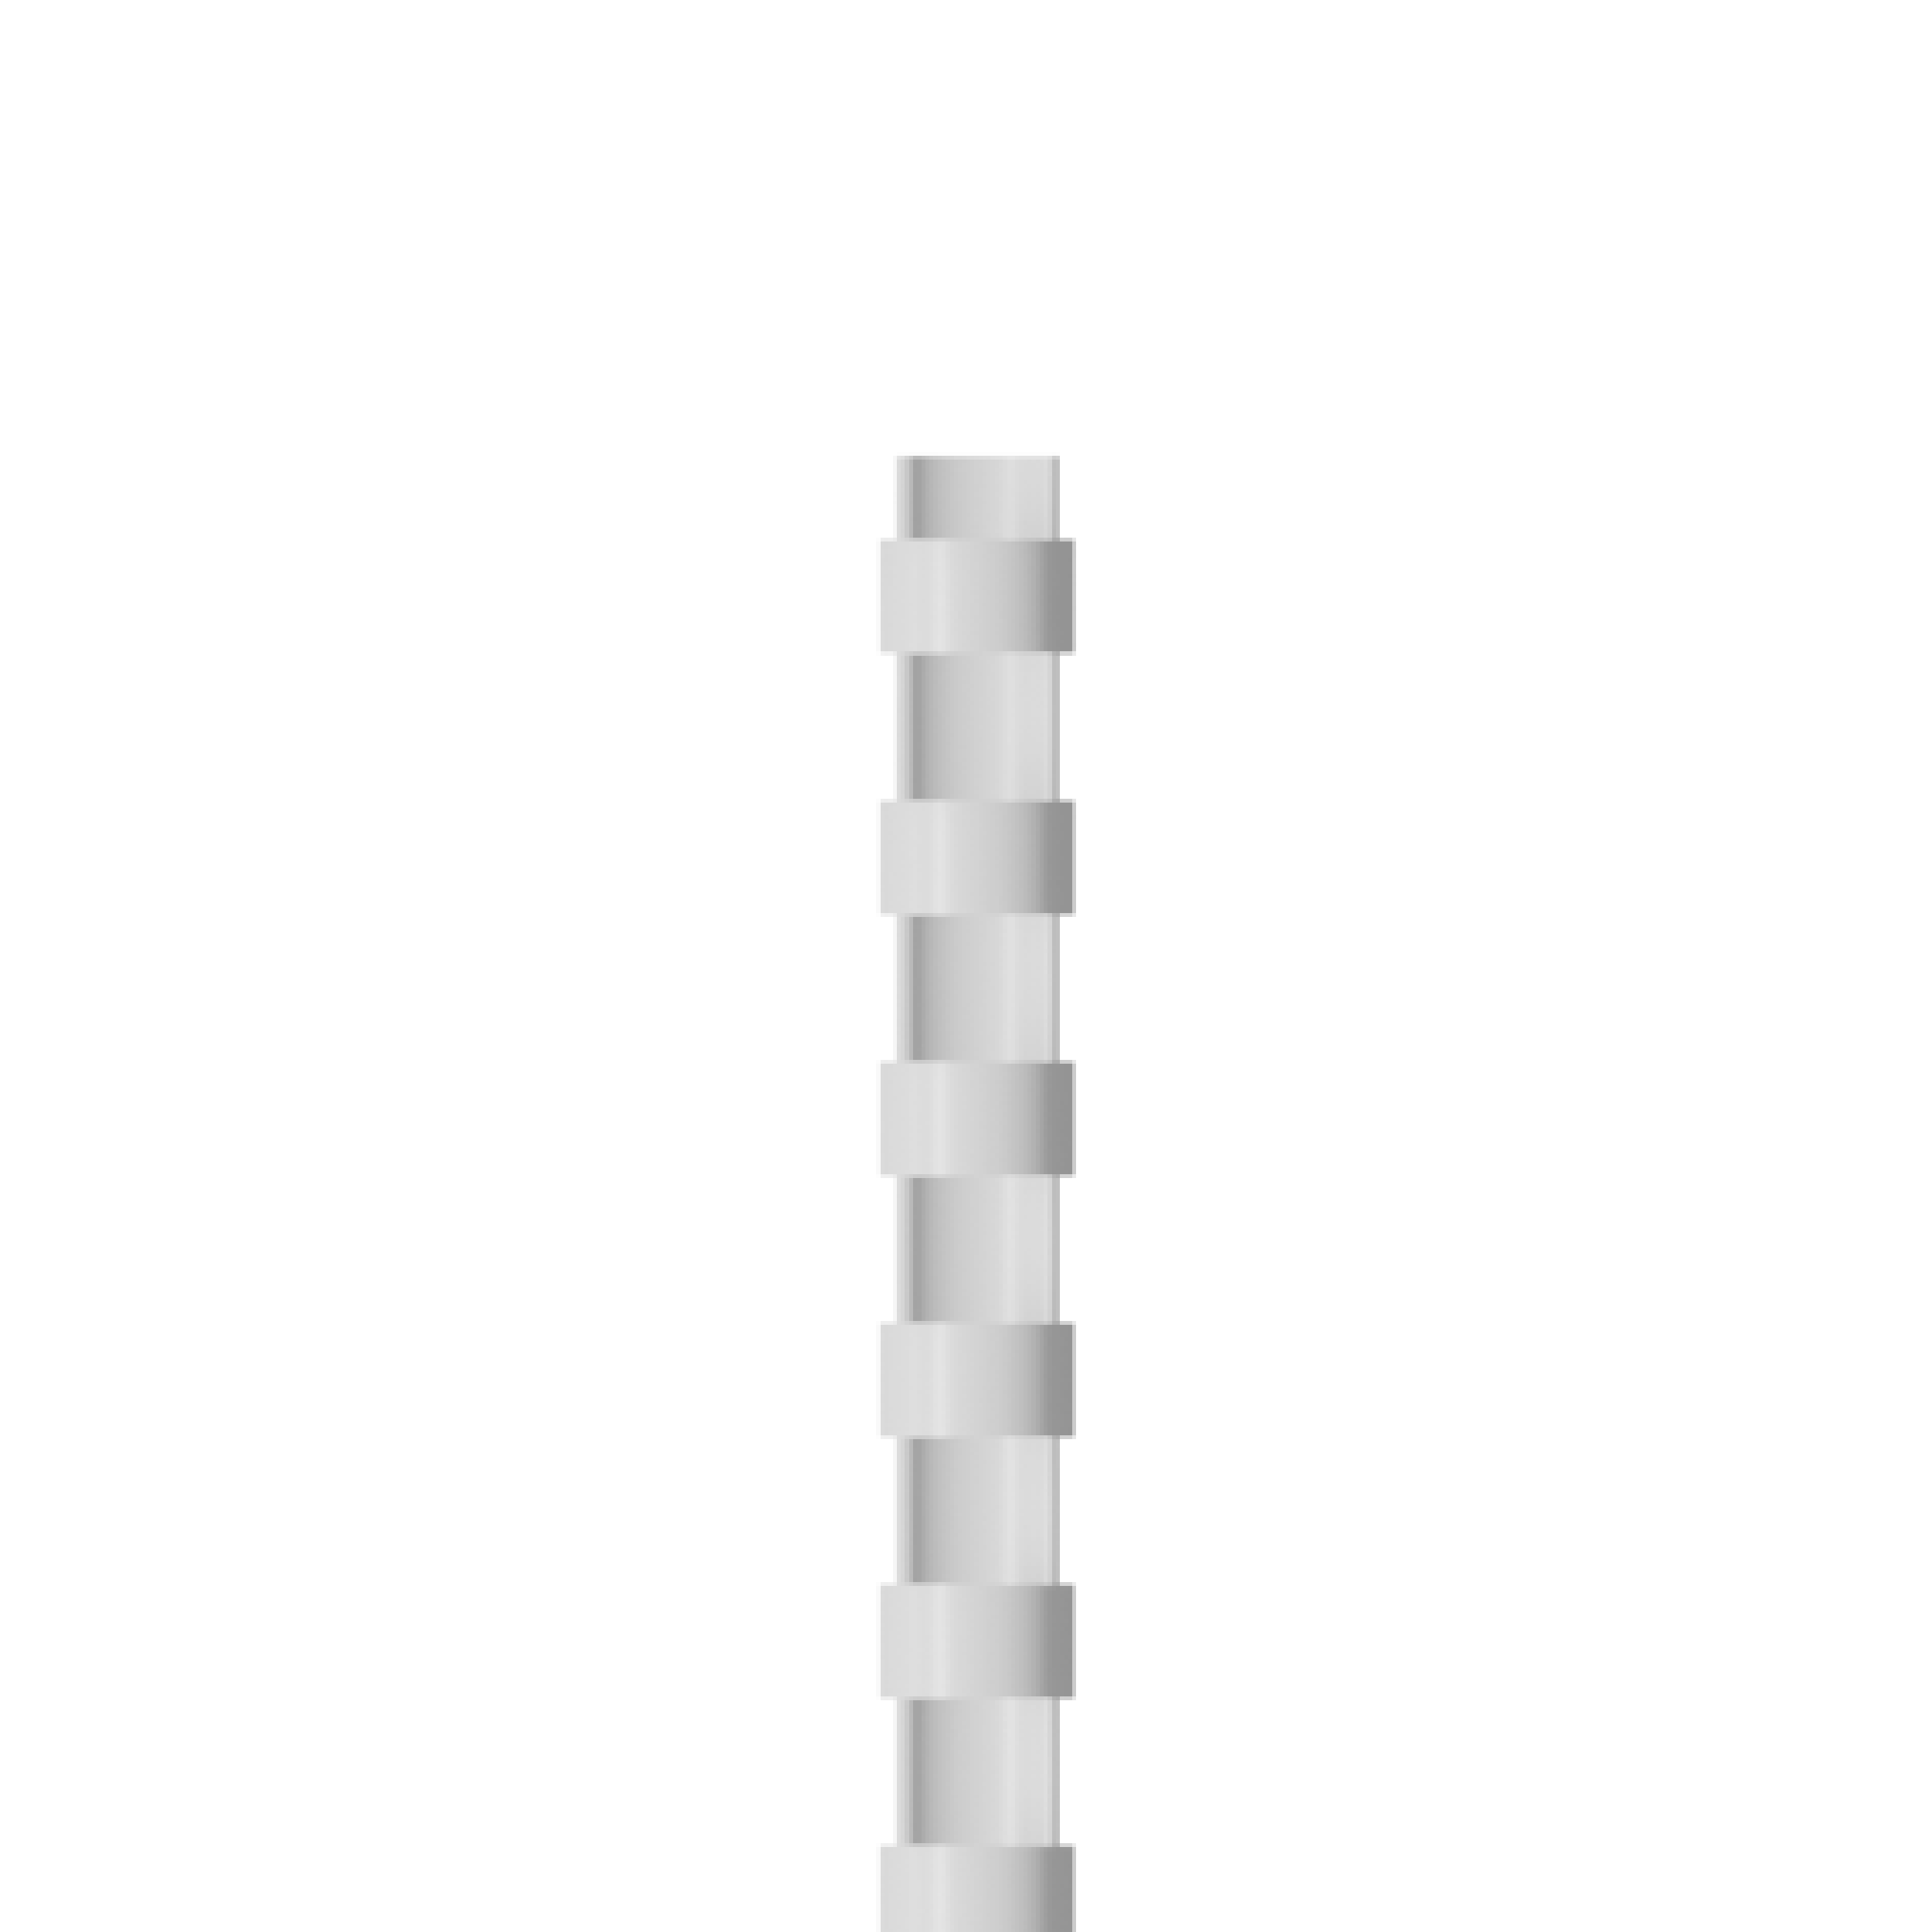 RAADO 10mm Plastic Spiral Binding Comb, White